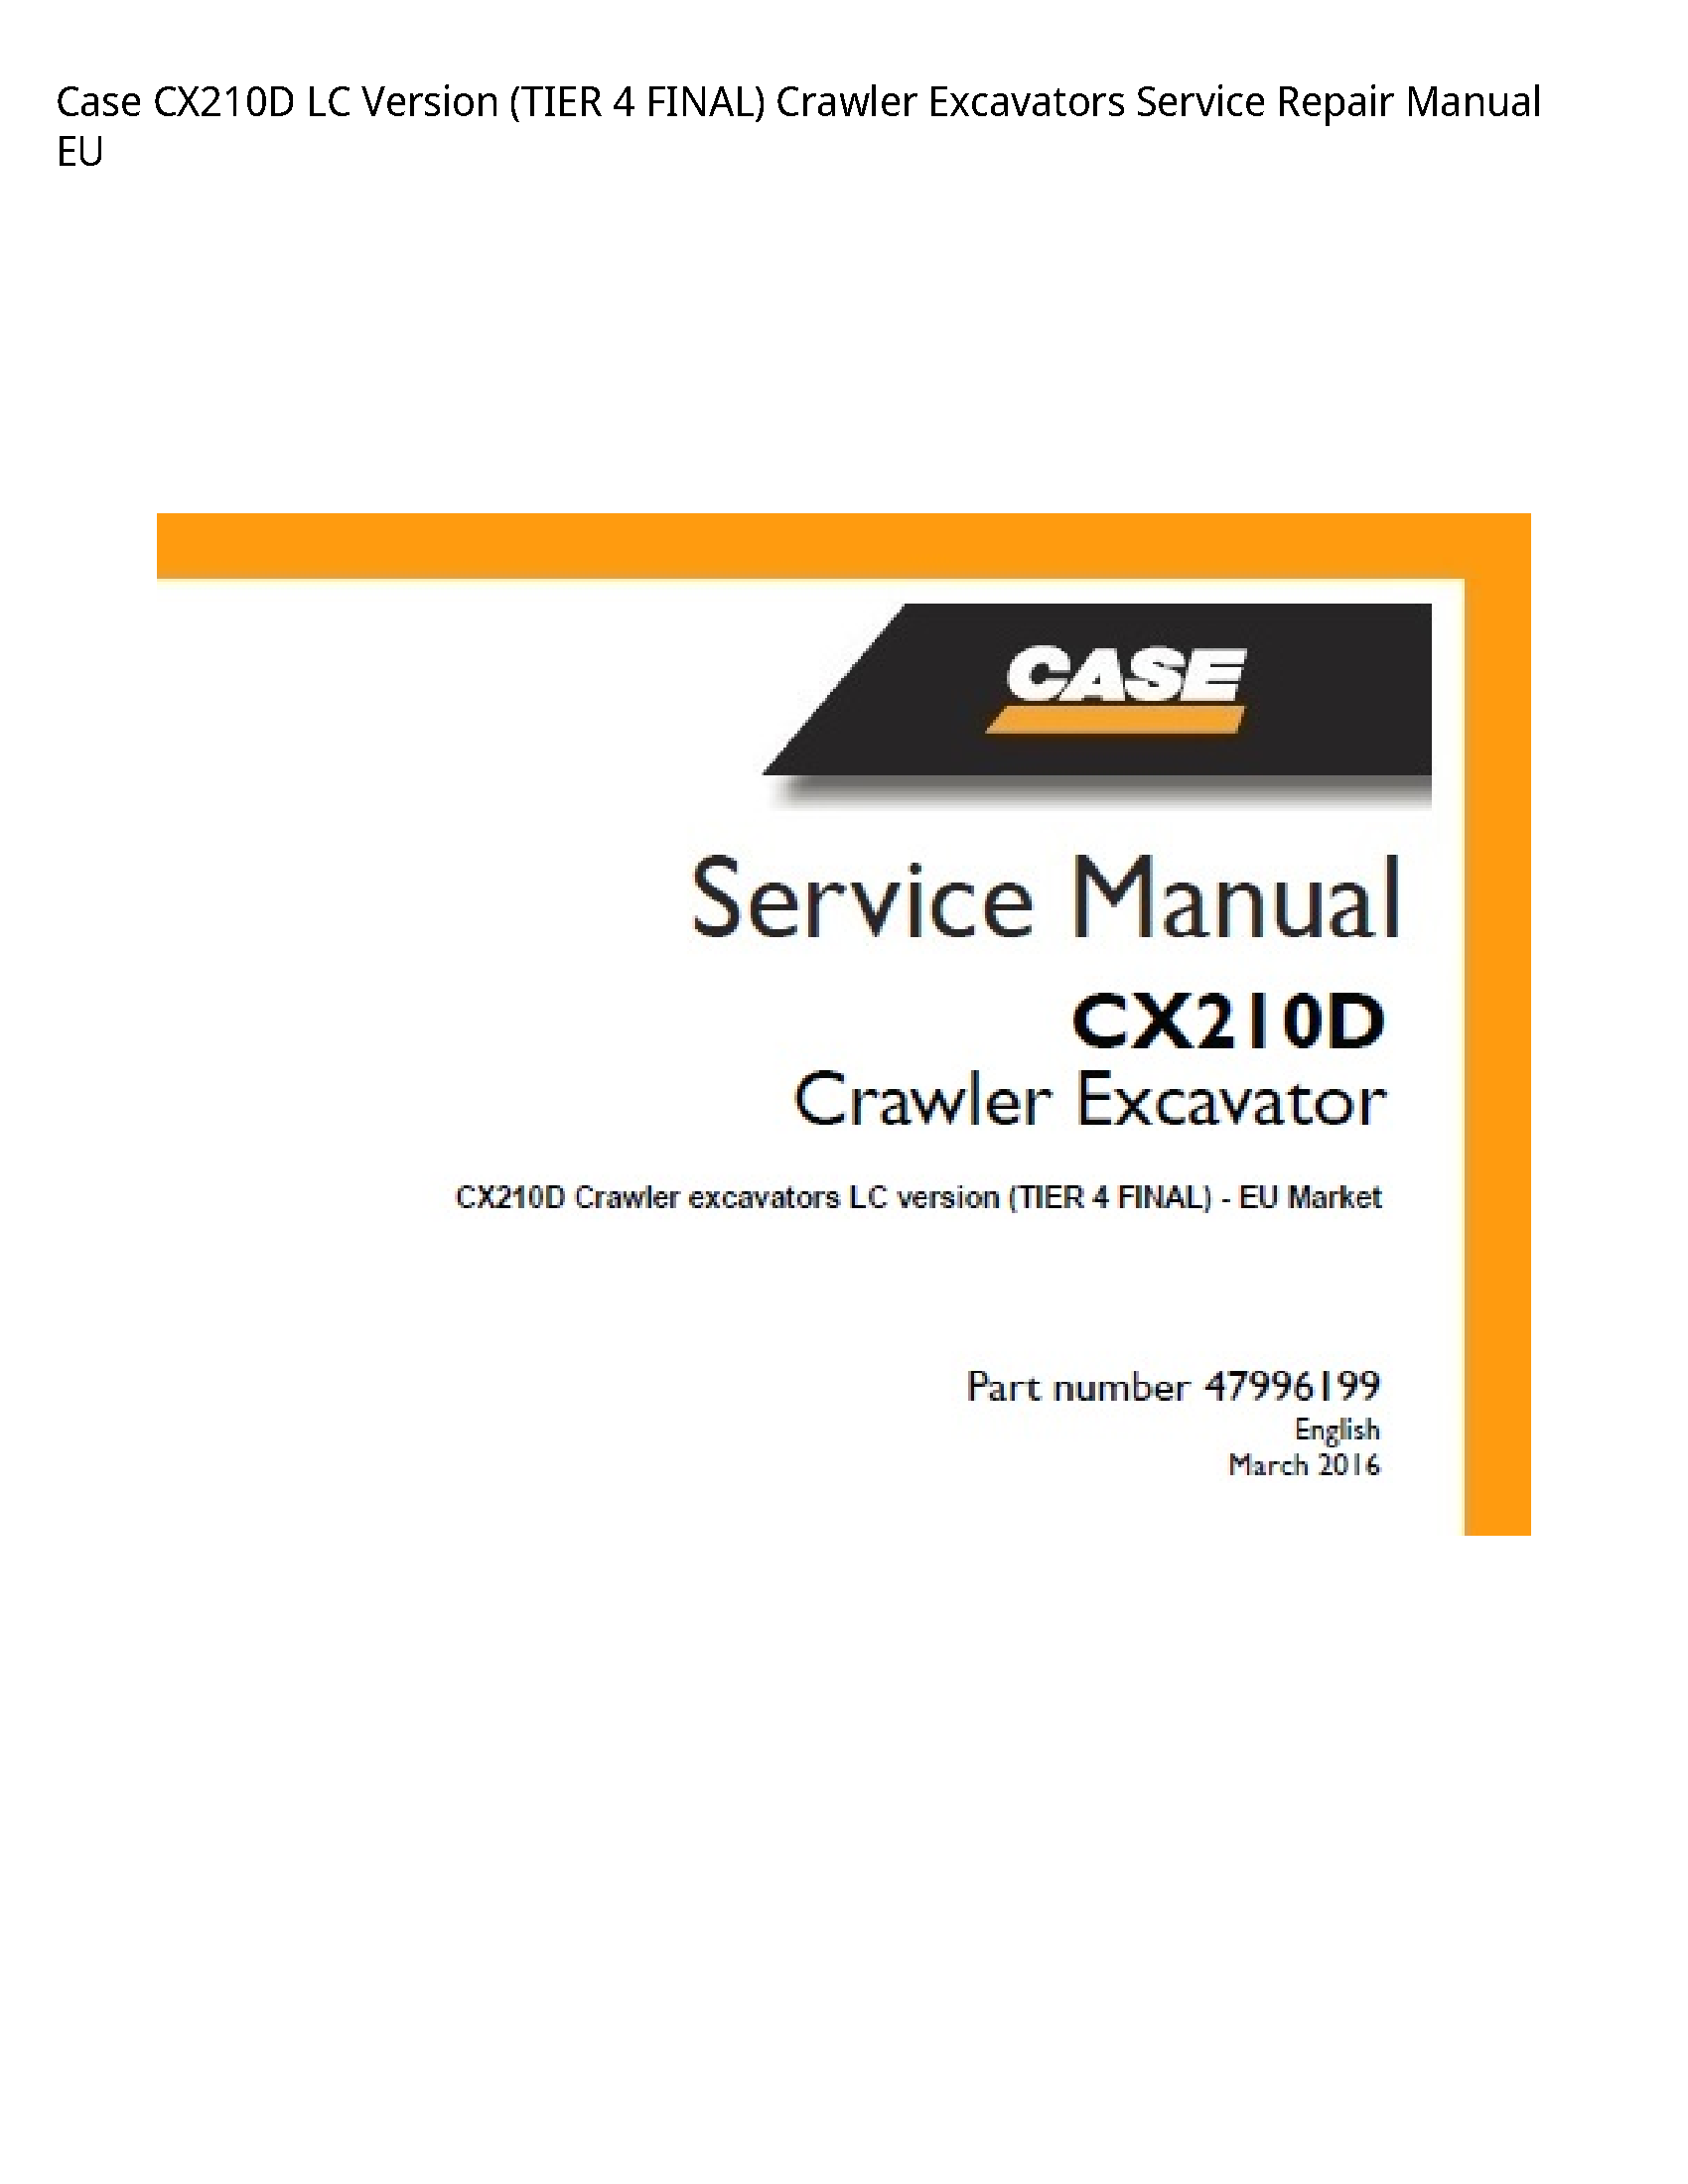 Case/Case IH CX210D LC Version (TIER FINAL) Crawler Excavators manual